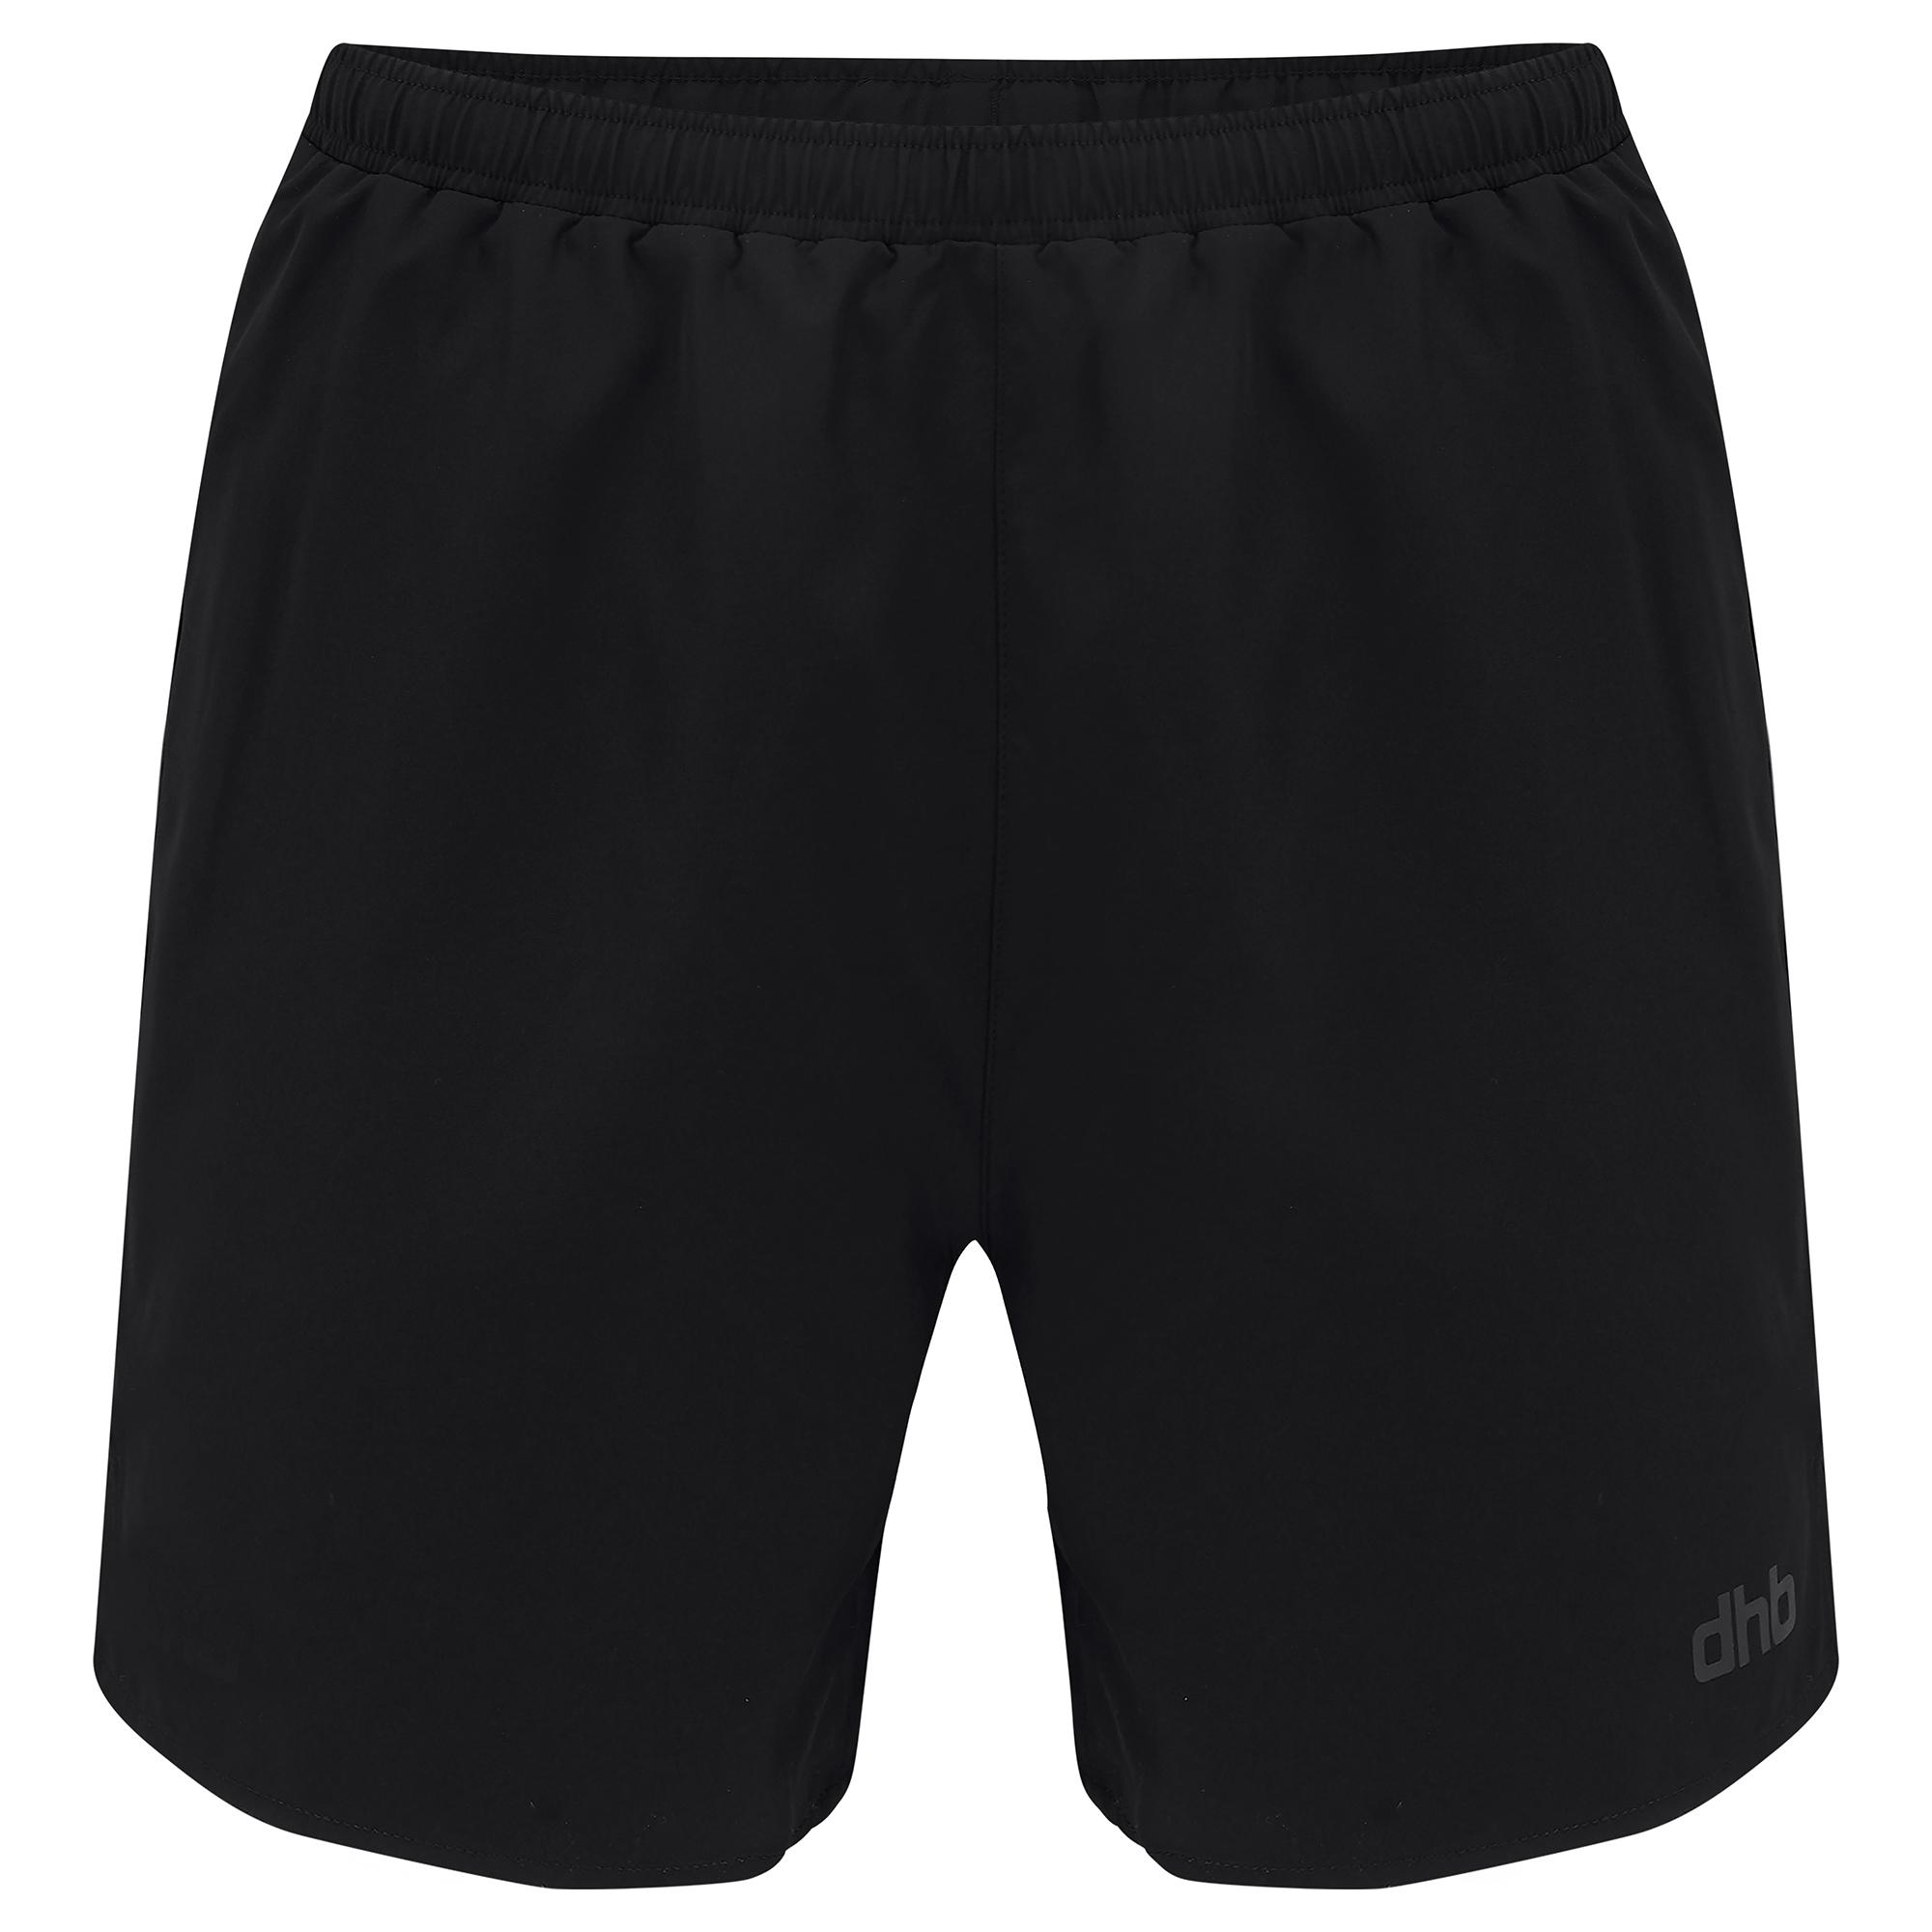 Dhb 5 Run Shorts - Black